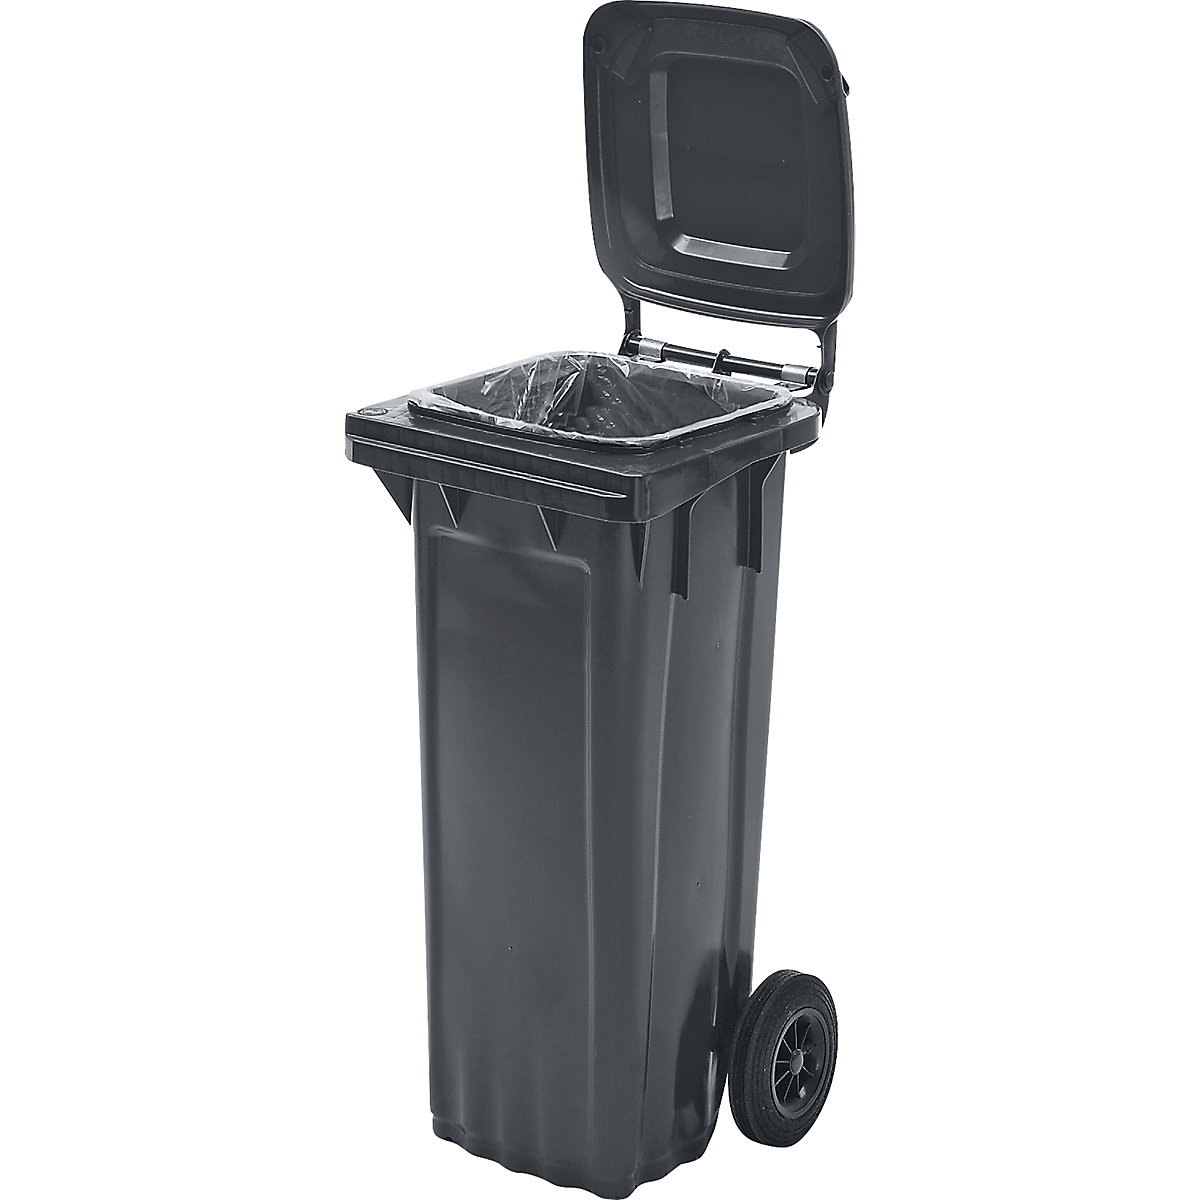 EUROKRAFTpro Mülltonne aus Kunststoff, DIN EN 840 (Produktabbildung 10)